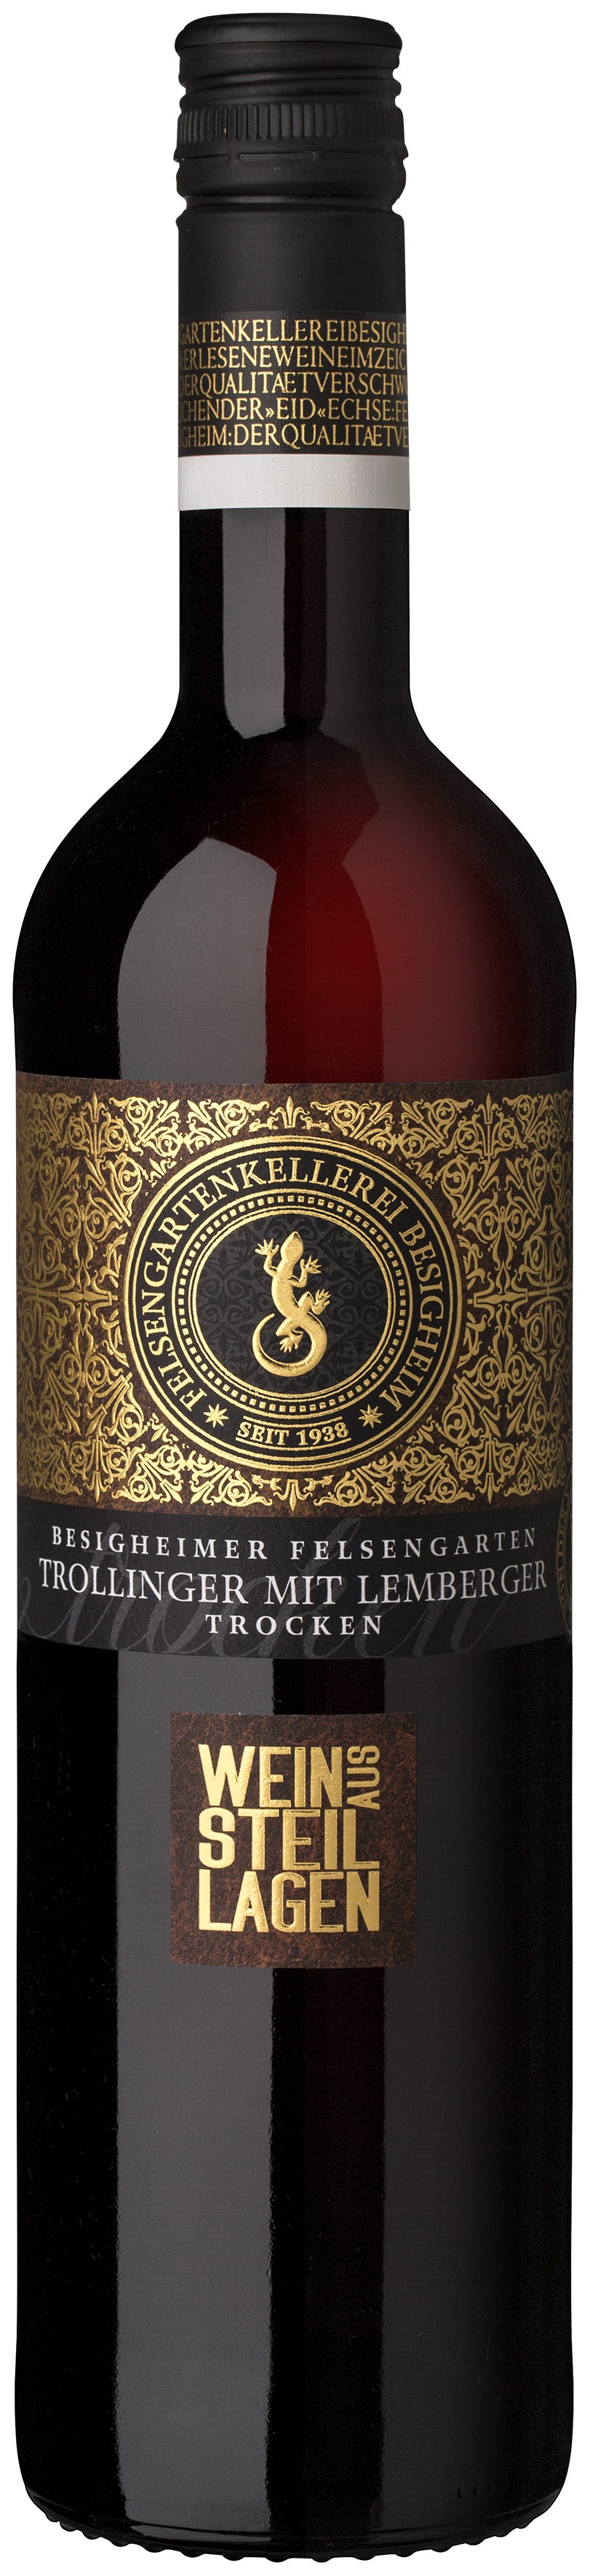 Besigheimer Felsengarten Steillagen Trollinger mit Lemberger Qualitätswein trocken 